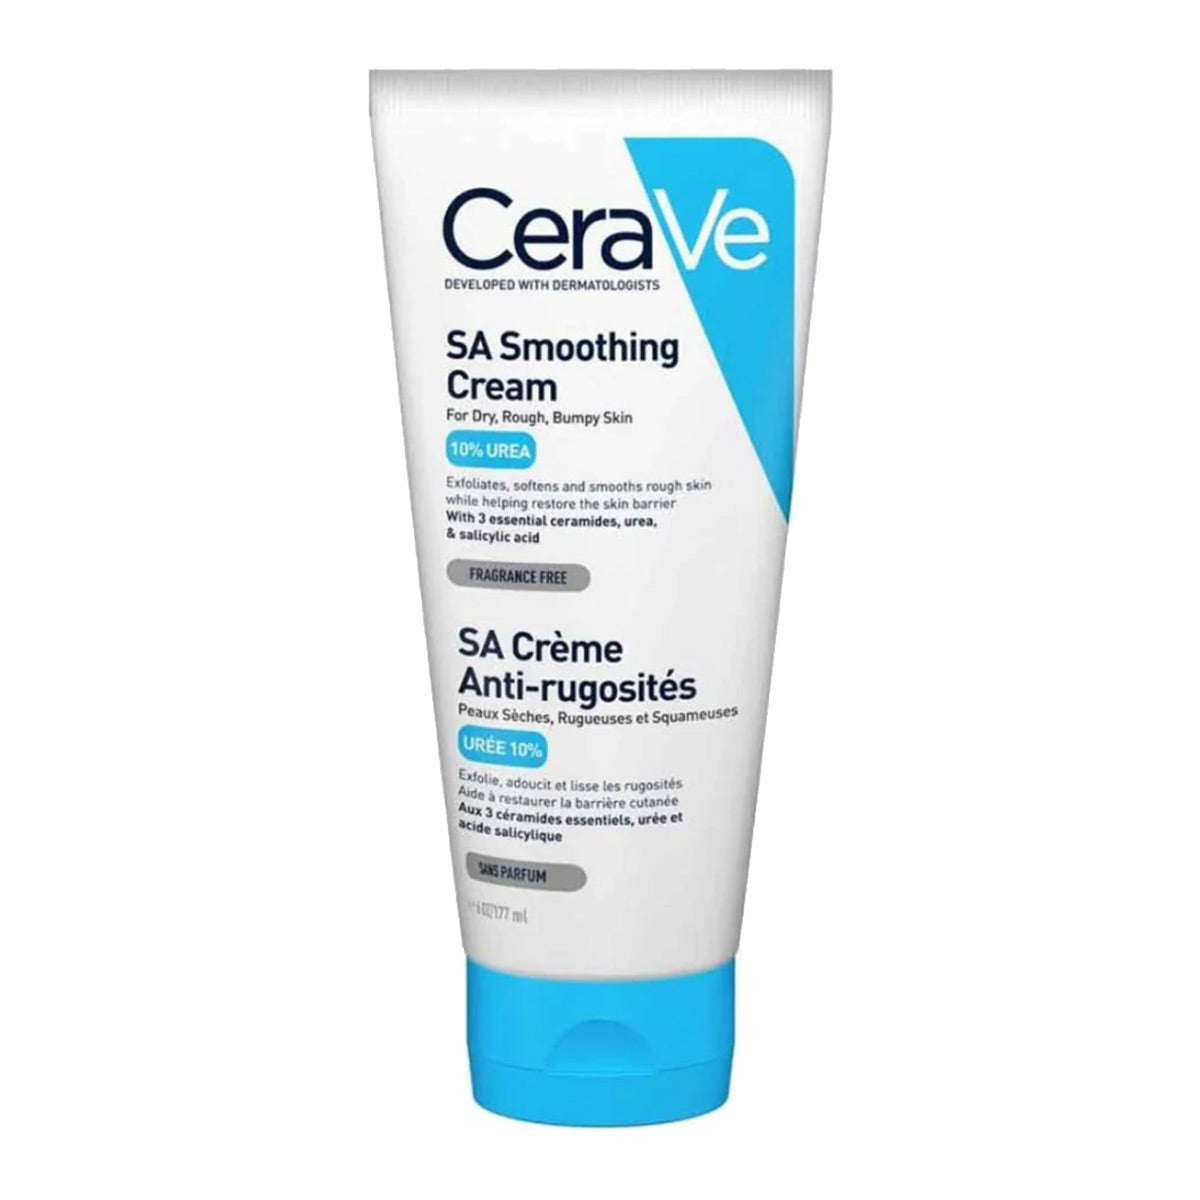 CeraVe SA Smoothing Cream 10% Urea 177 ml